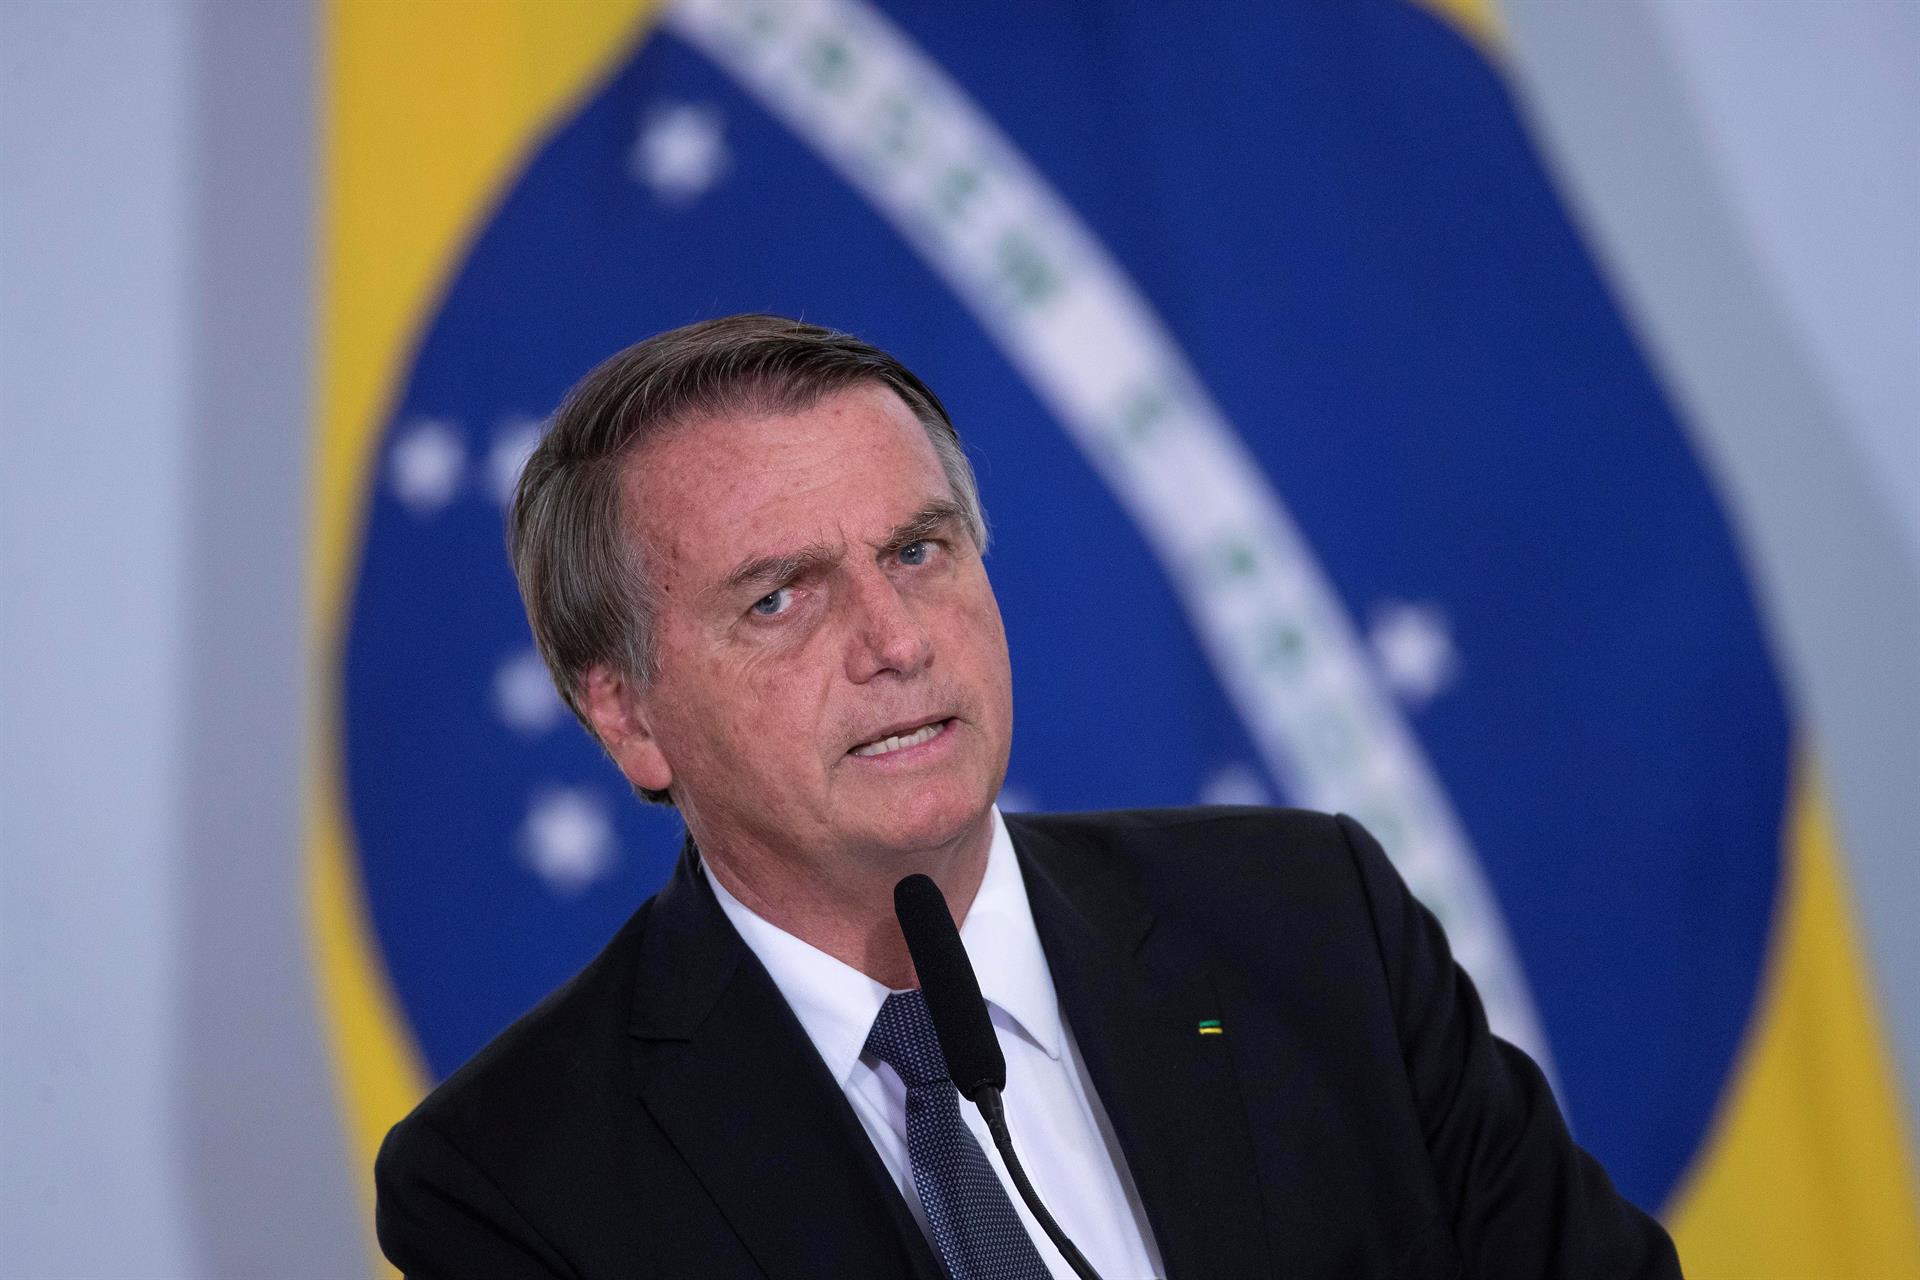 Jair Bolsonaro reitera que no habrá "pasaporte sanitario" en Brasil